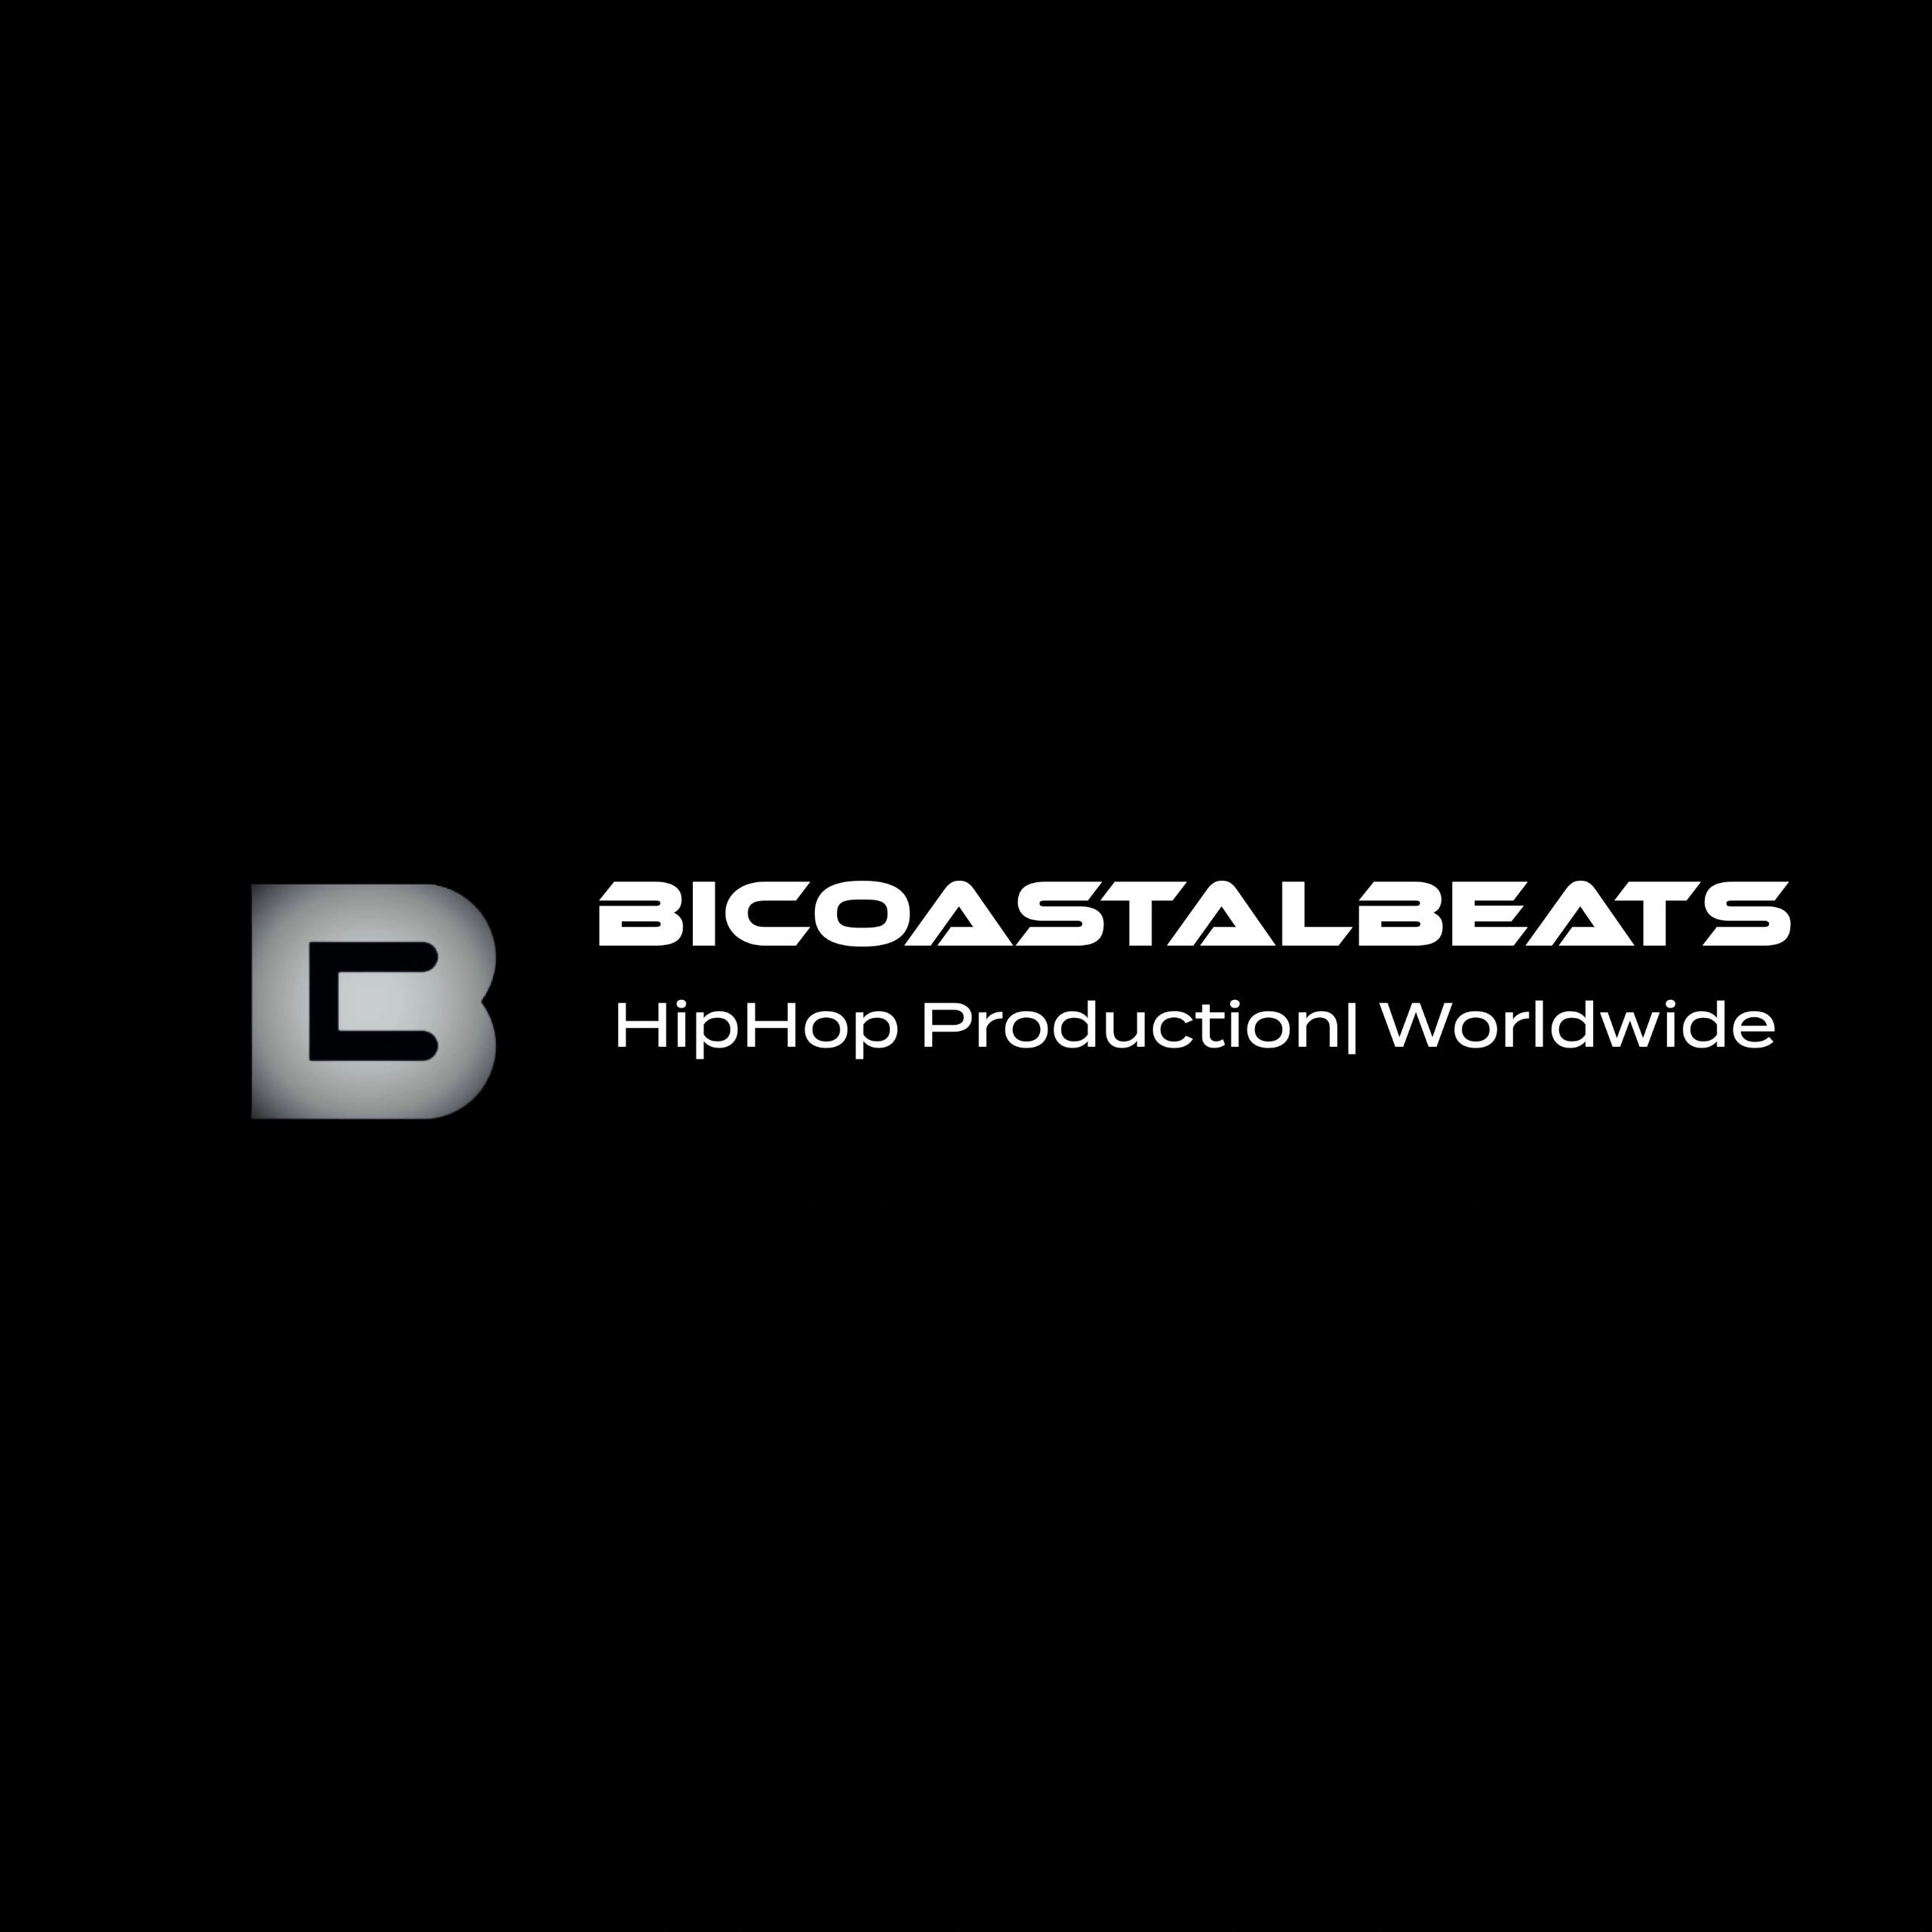 (c) Bicoastalbeats.com